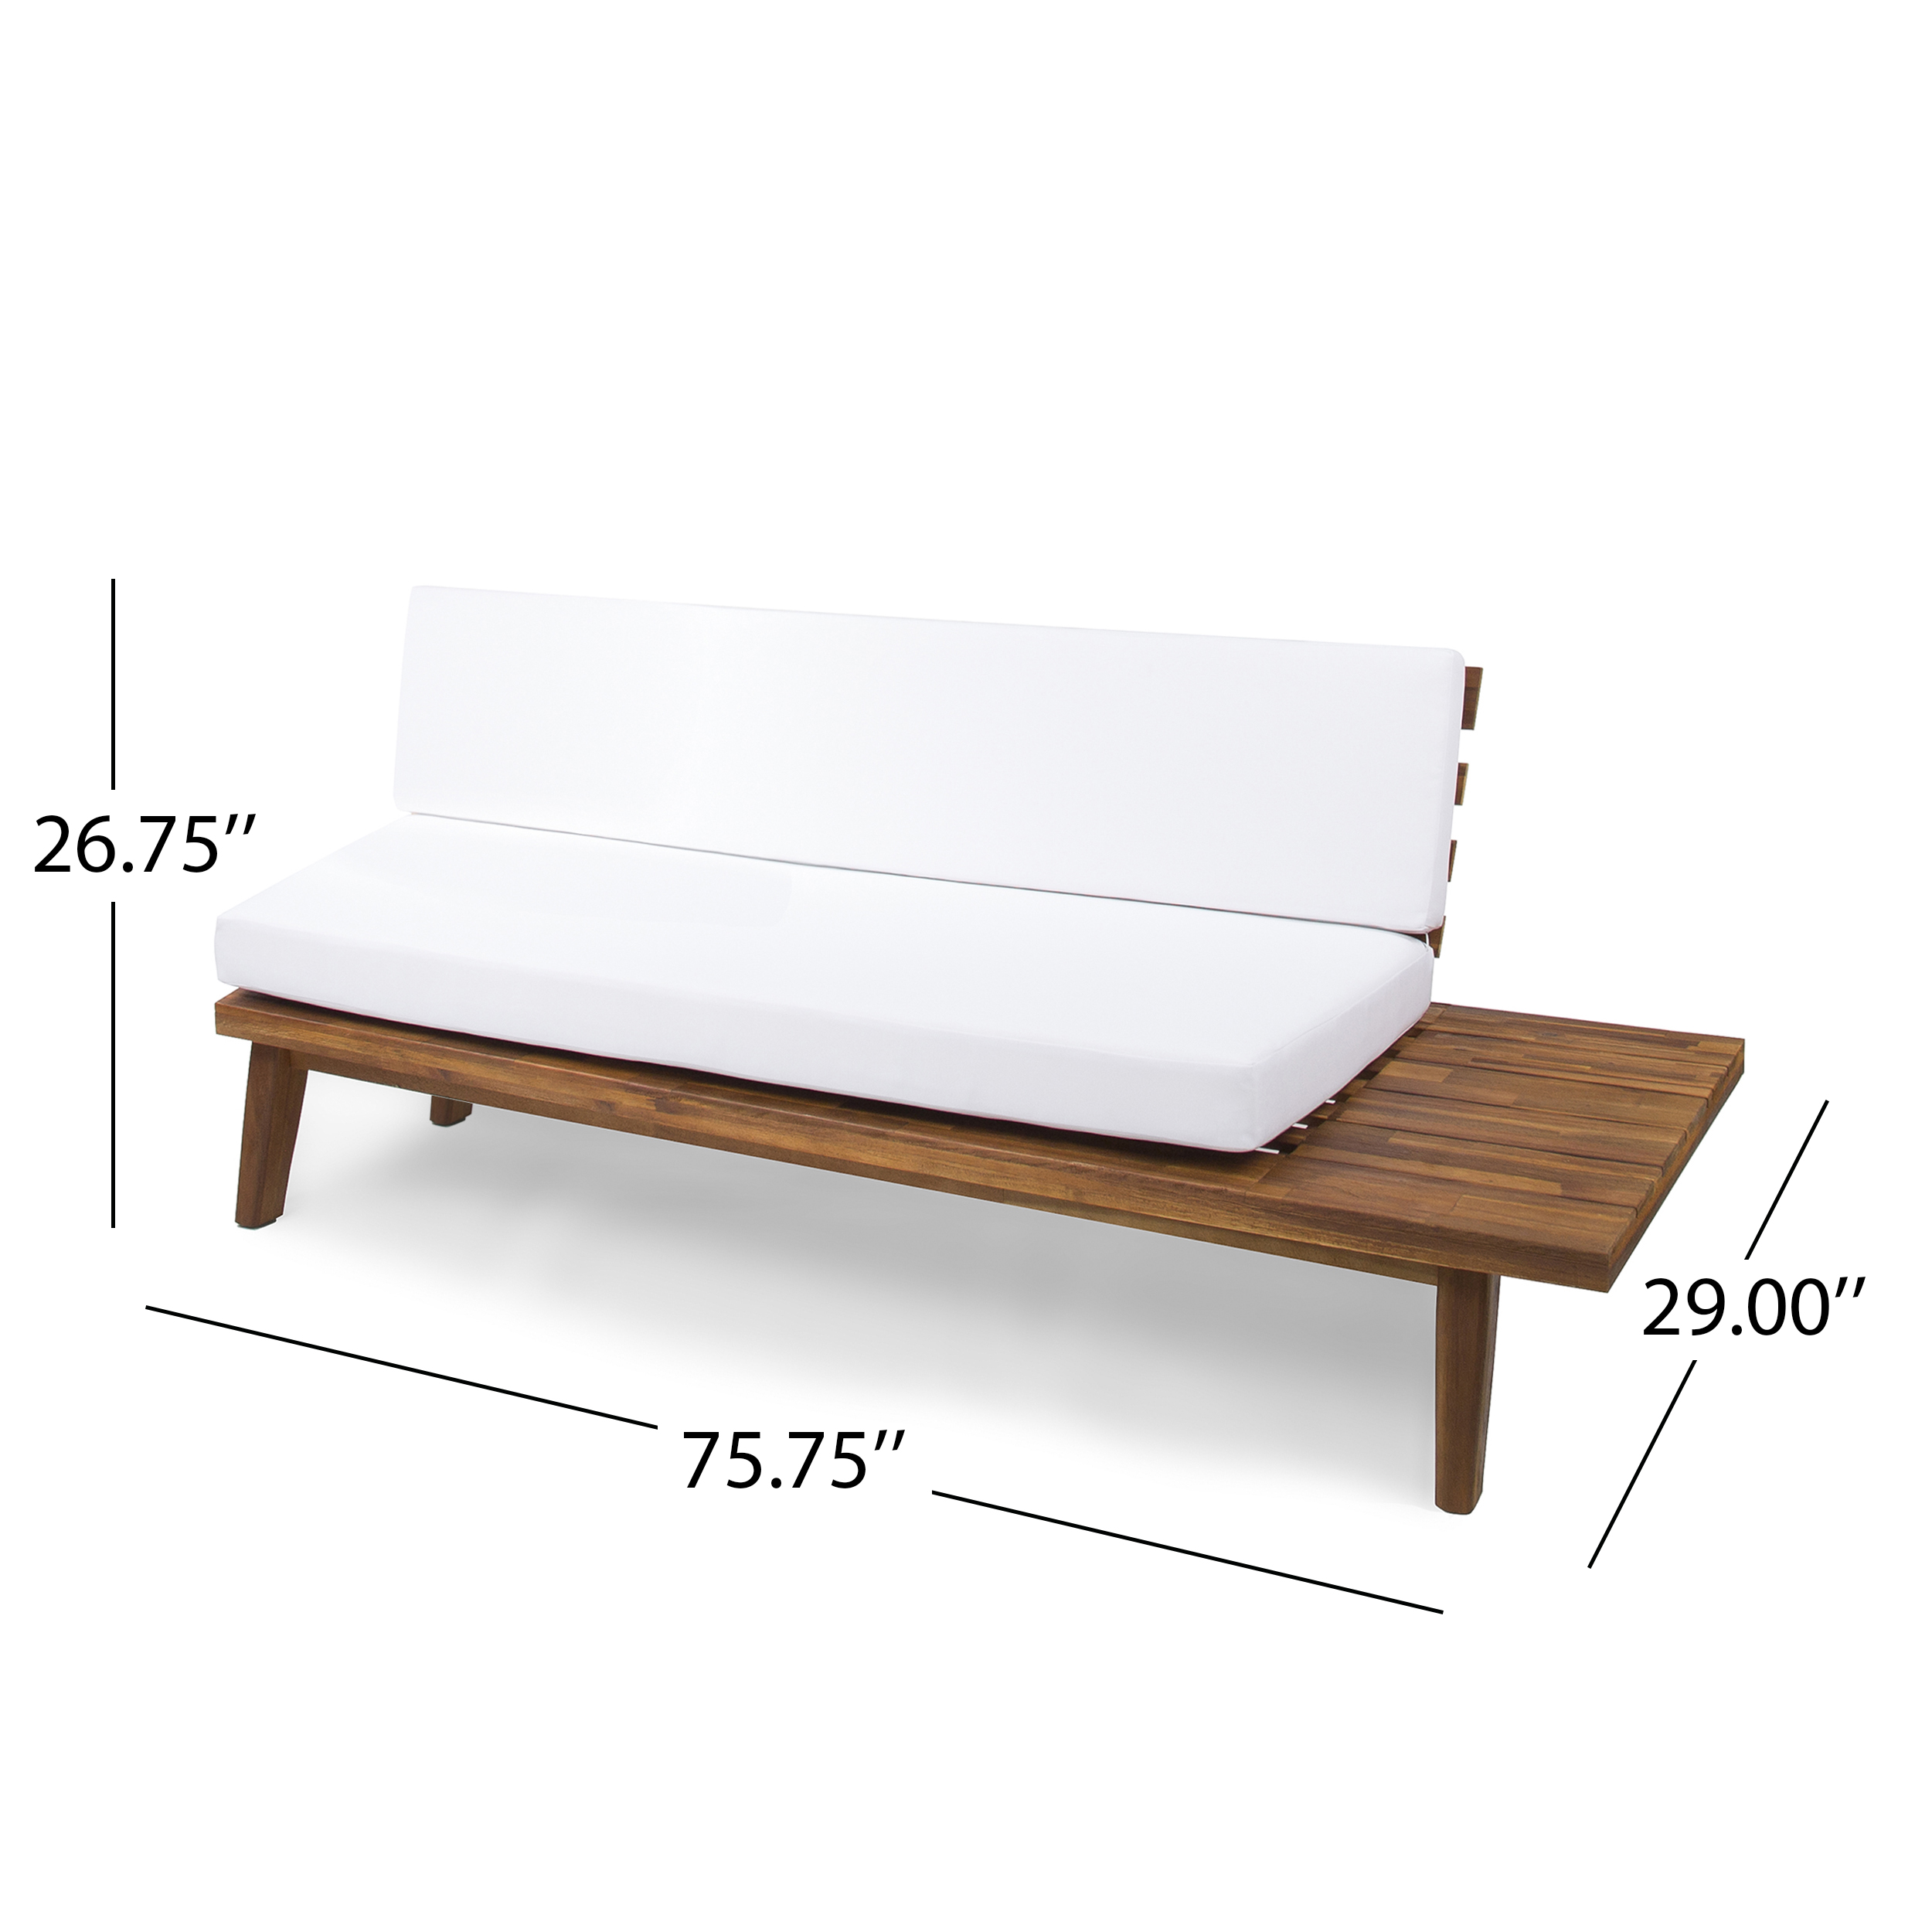 Park Outdoor V Shaped 4 Piece Acacia Wood Sectional Sofa Set with Cushions, Sandblast Finished, White - image 11 of 15